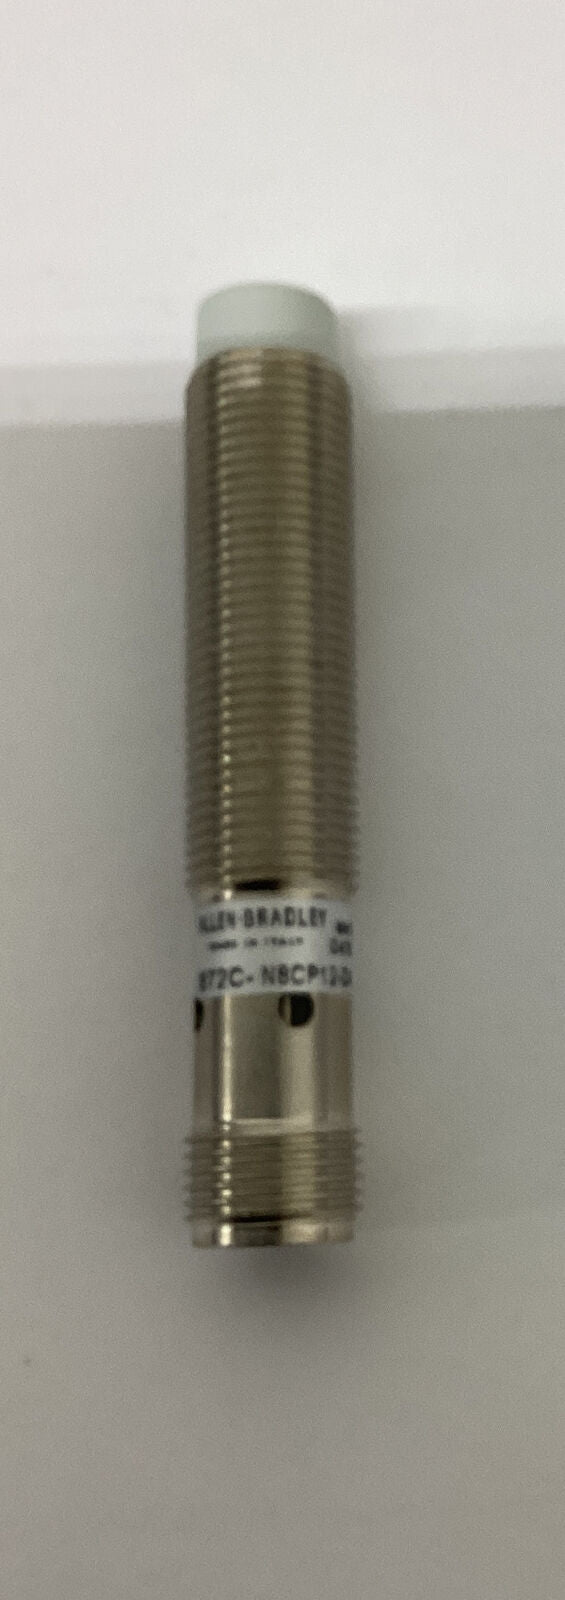 Allen Bradley  872C-N8CP12-D4  Ser. A  Sensor  10-30VDC  (CL259) - 0